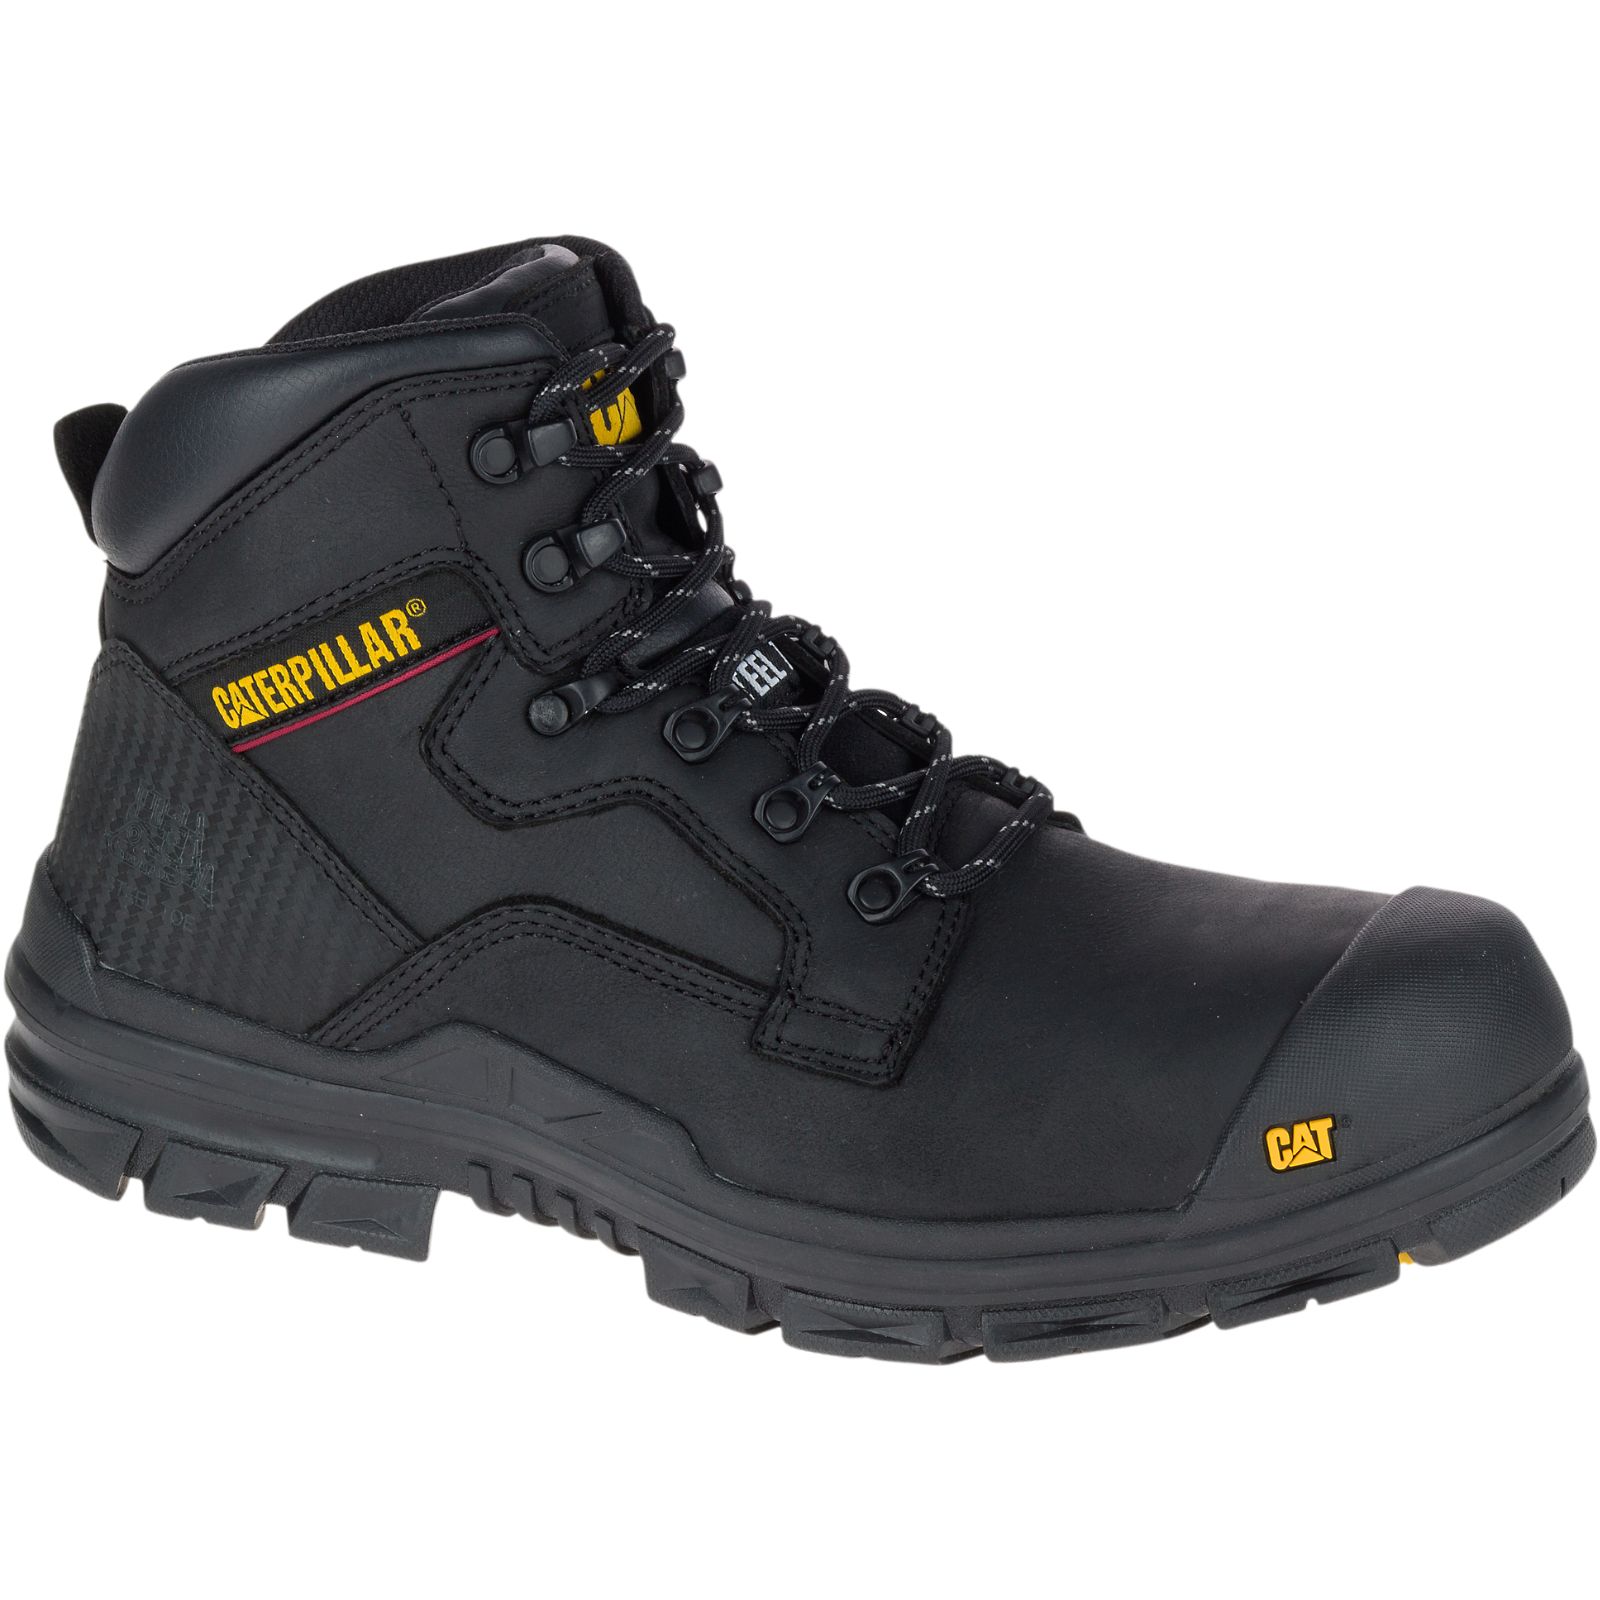 Caterpillar Boots Sale - Caterpillar Bearing S3 Water Resistant Hro Src Steel Toe Mens Work Boots Black (152839-LSR)